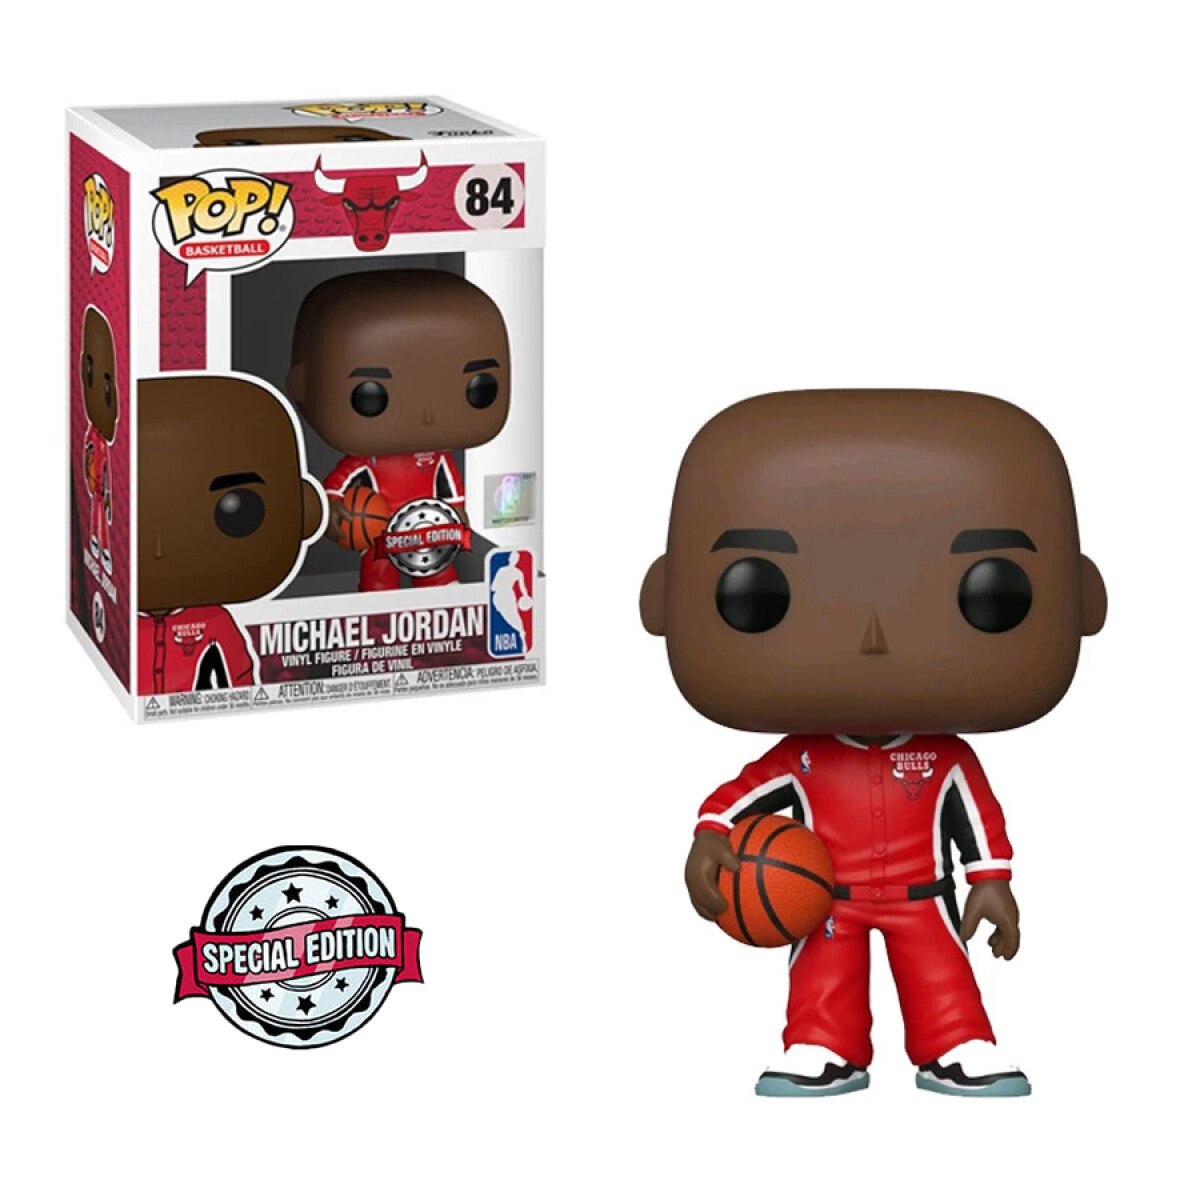 Michael Jordan (Red Warm-ups) NBA [Exclusivo] - 84 